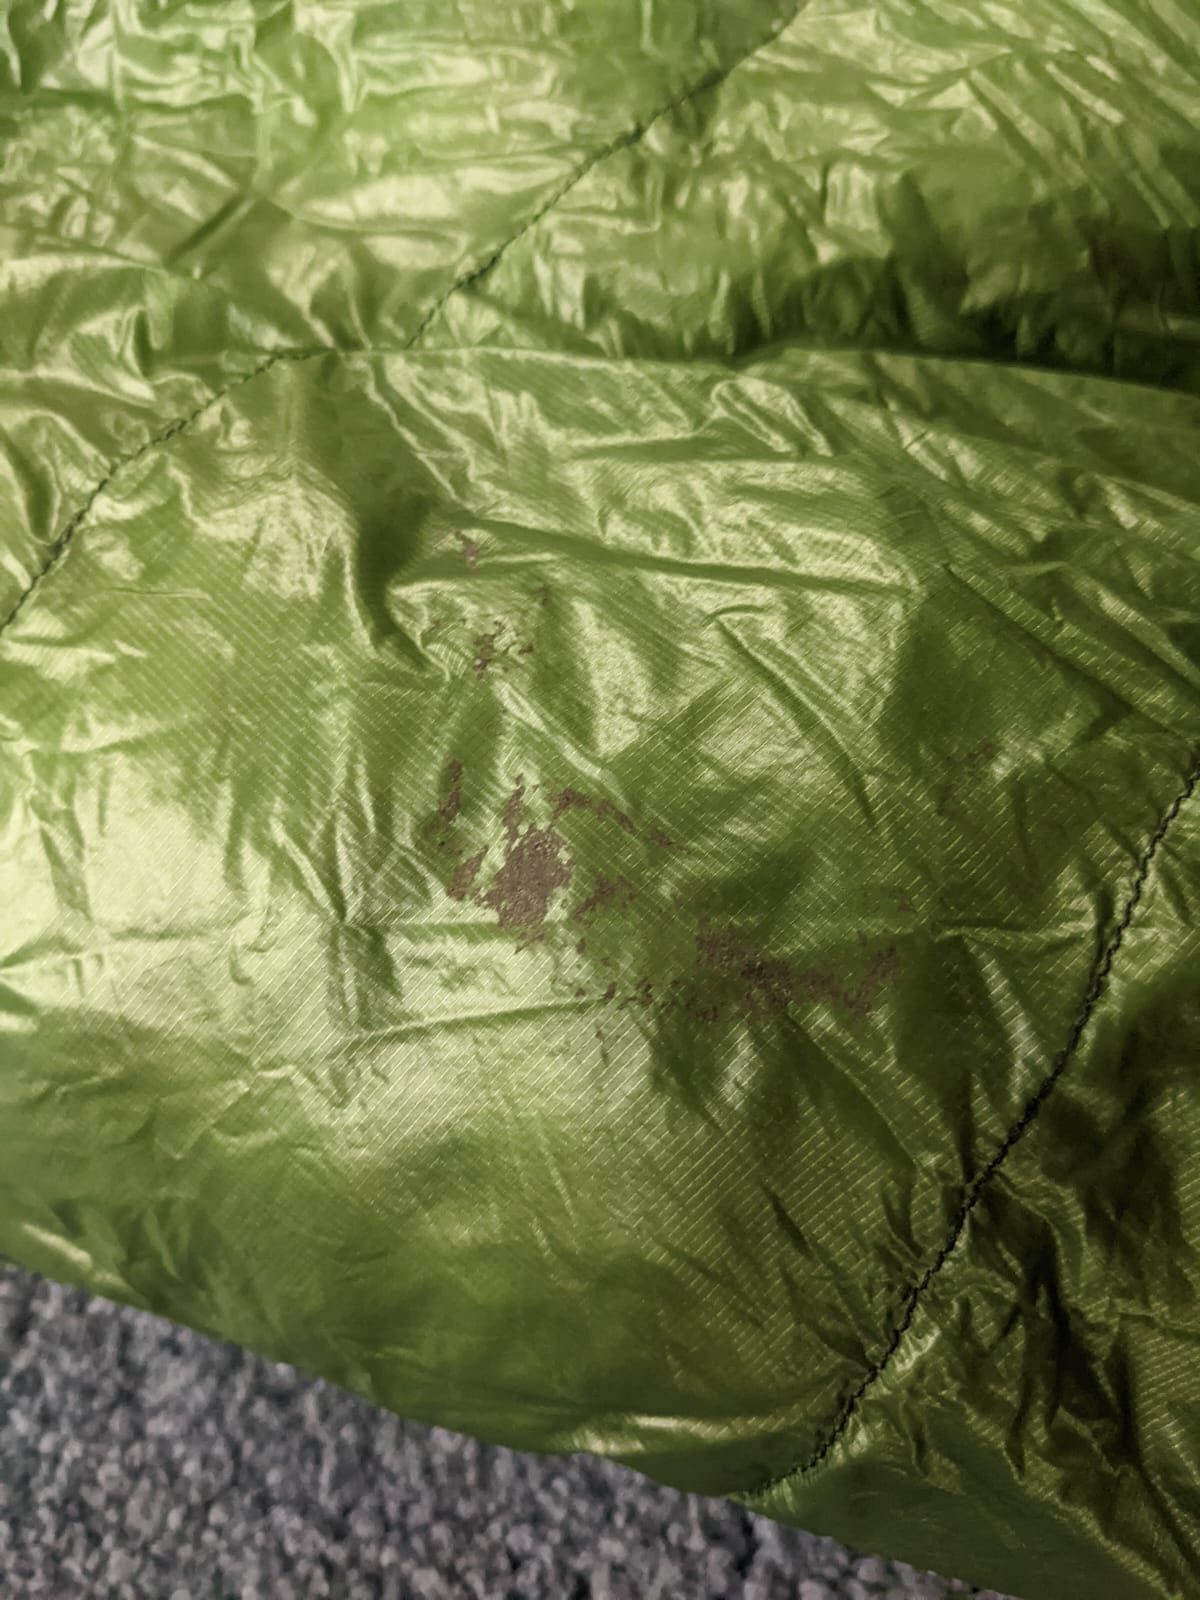 Zpacks 20F degree twin quilt sleeping bag 6 foot length - Backpacking Light